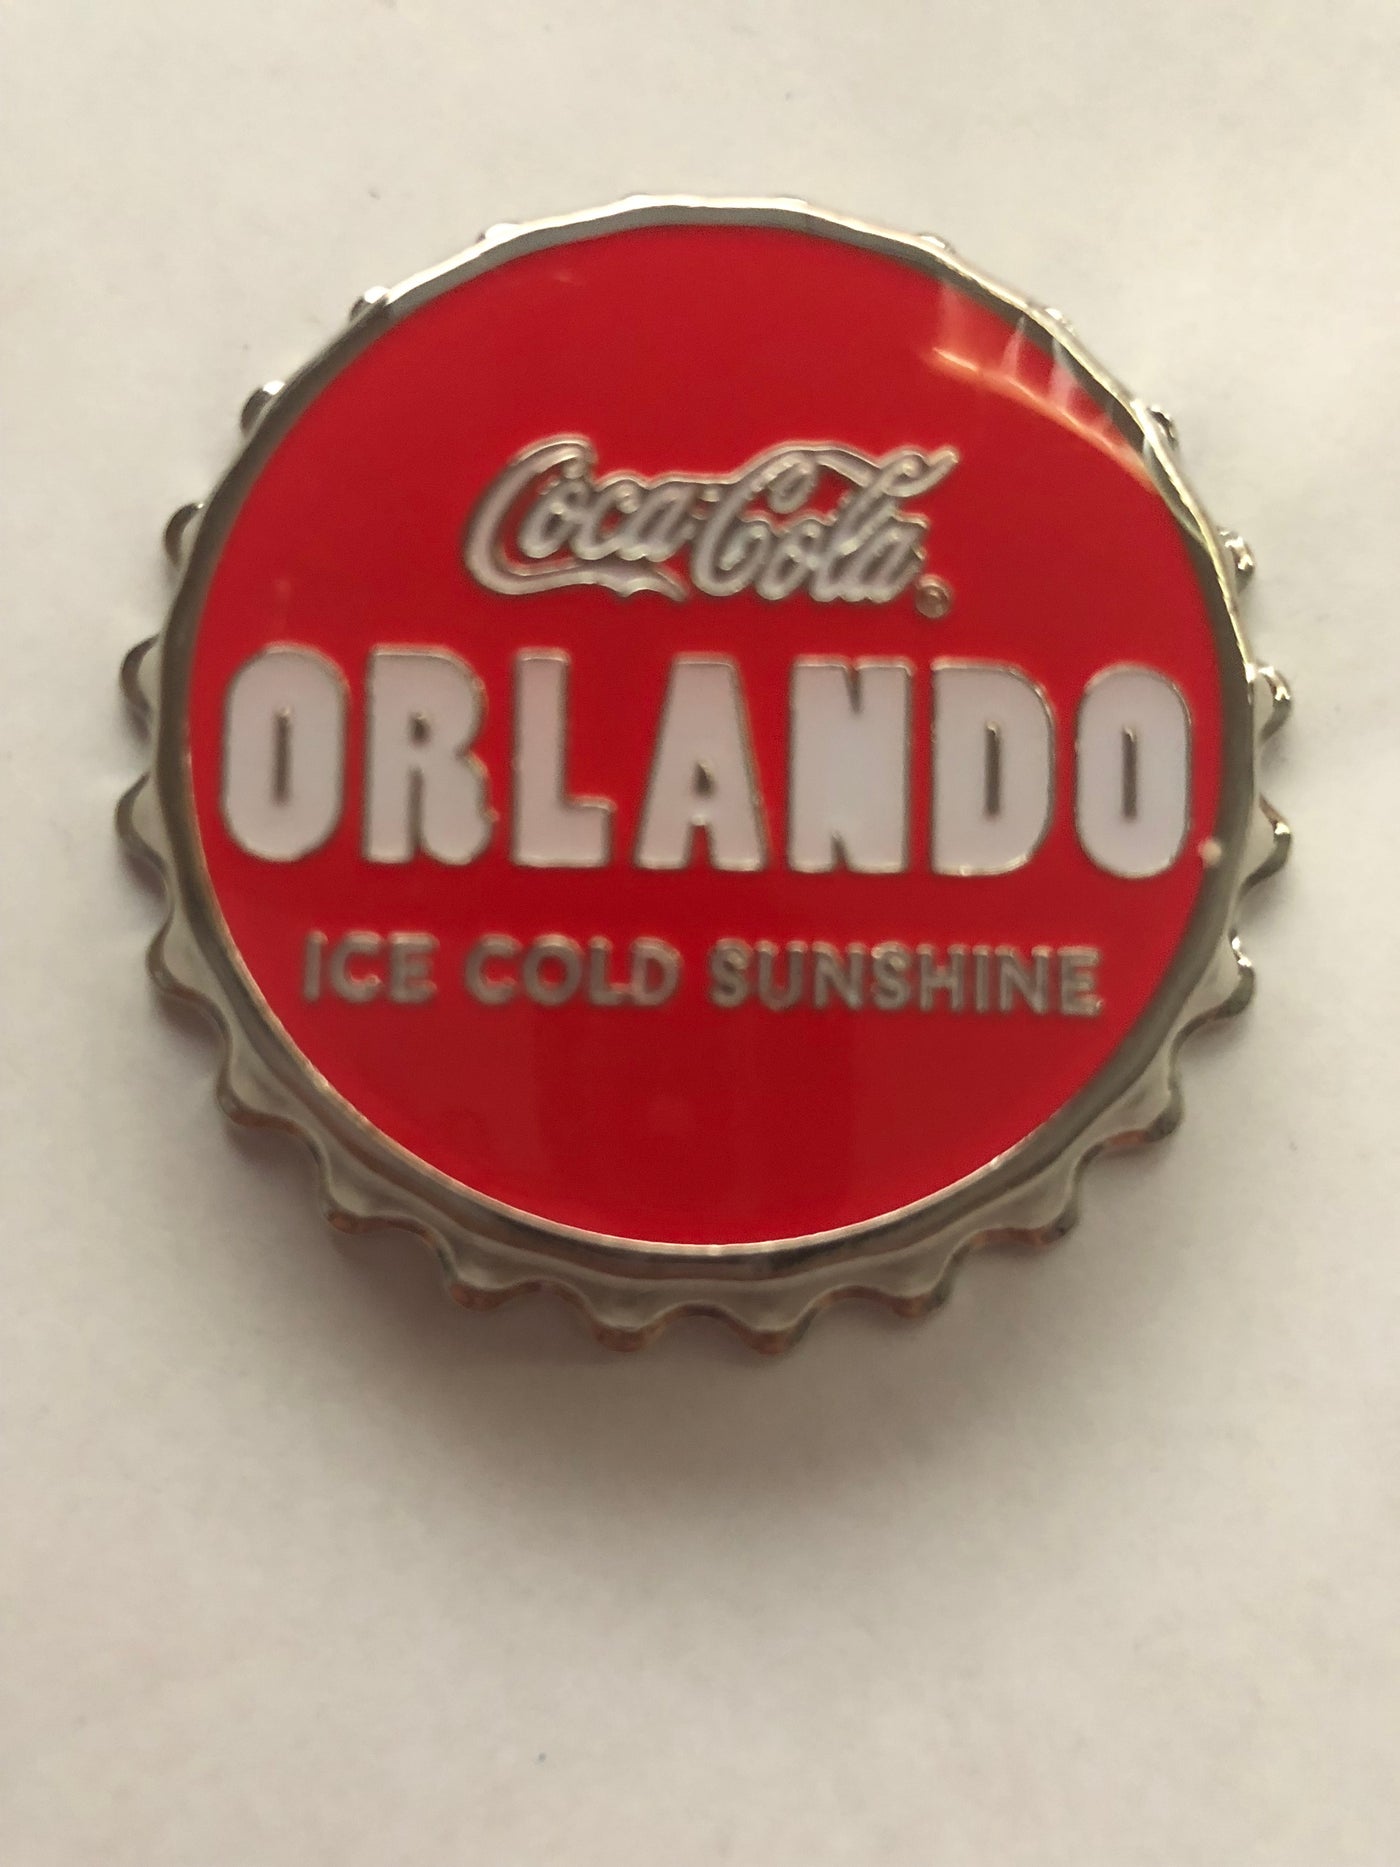 Authentic Coca-Cola Coke Orlando Ice Cold Sunshine Bottle Opener Magnet New